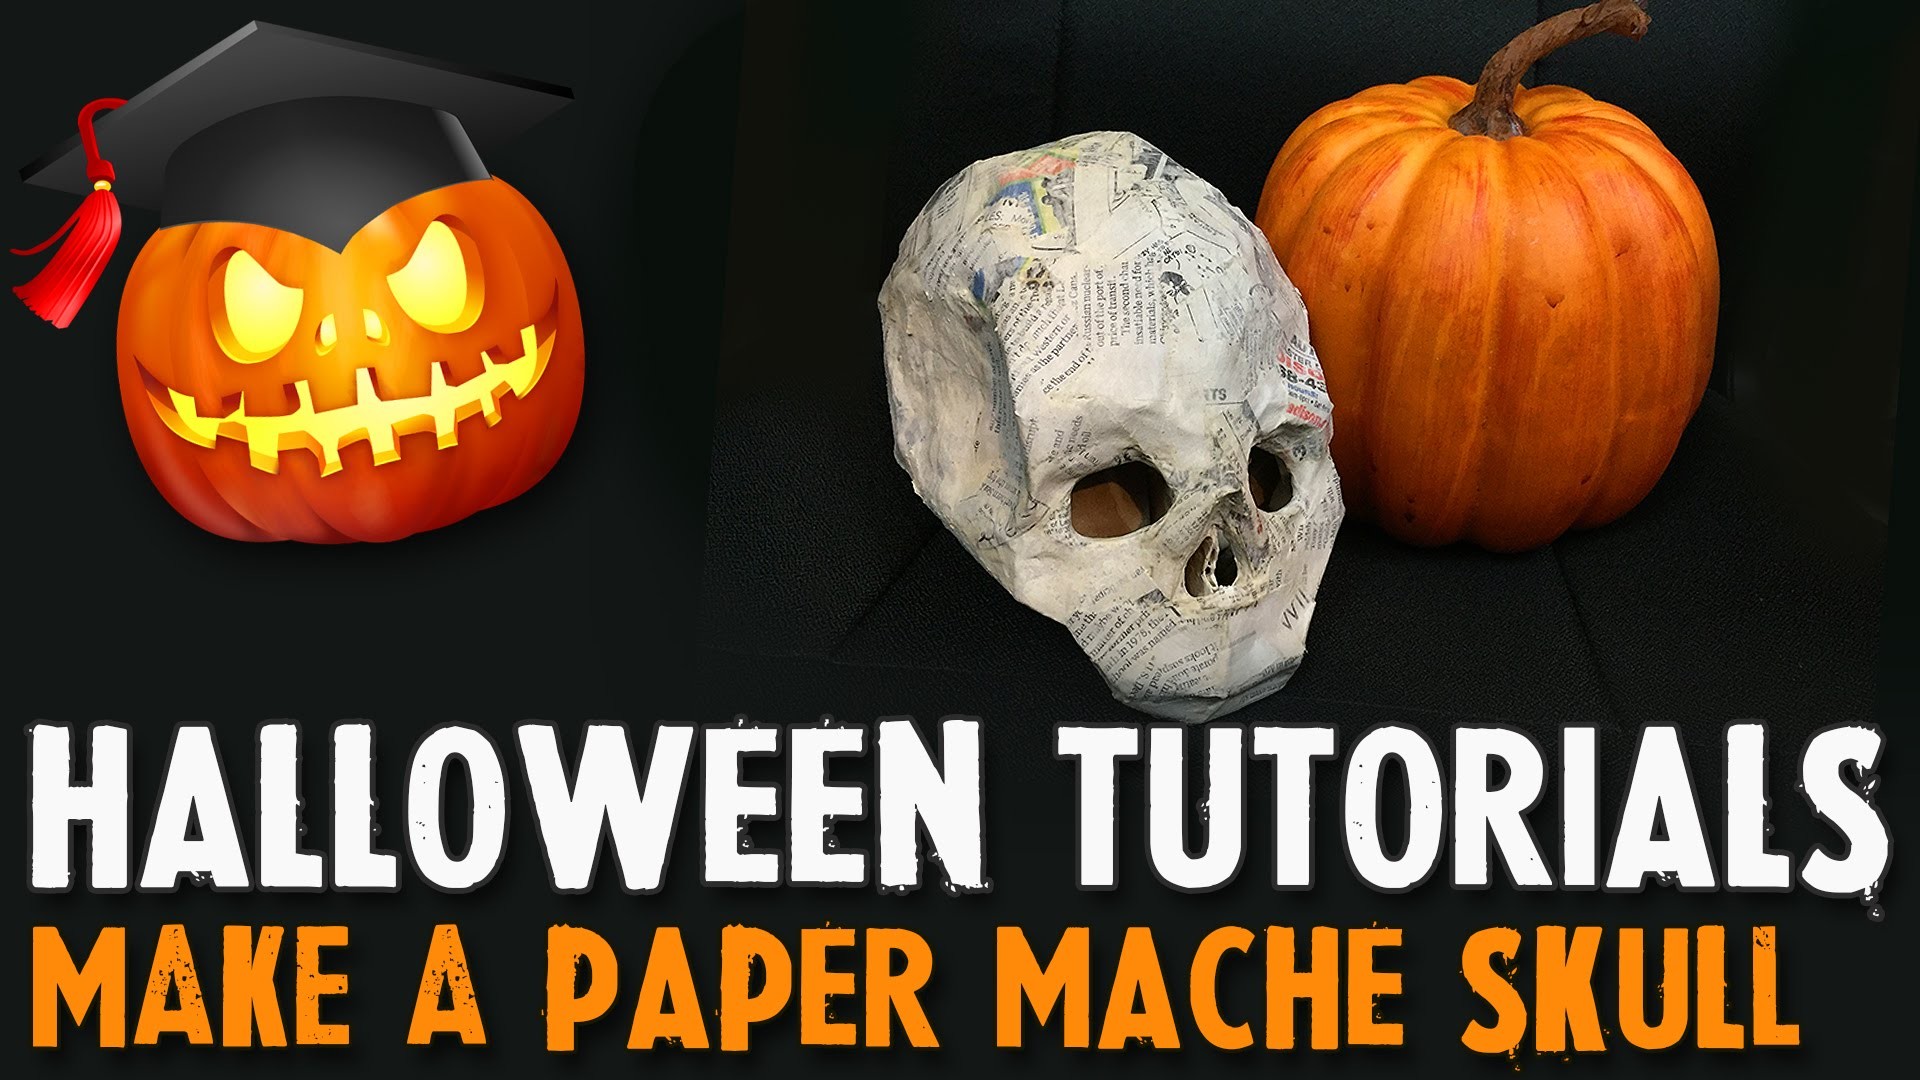 Tutorial 3 Making a Paper Mache Skull Part 2